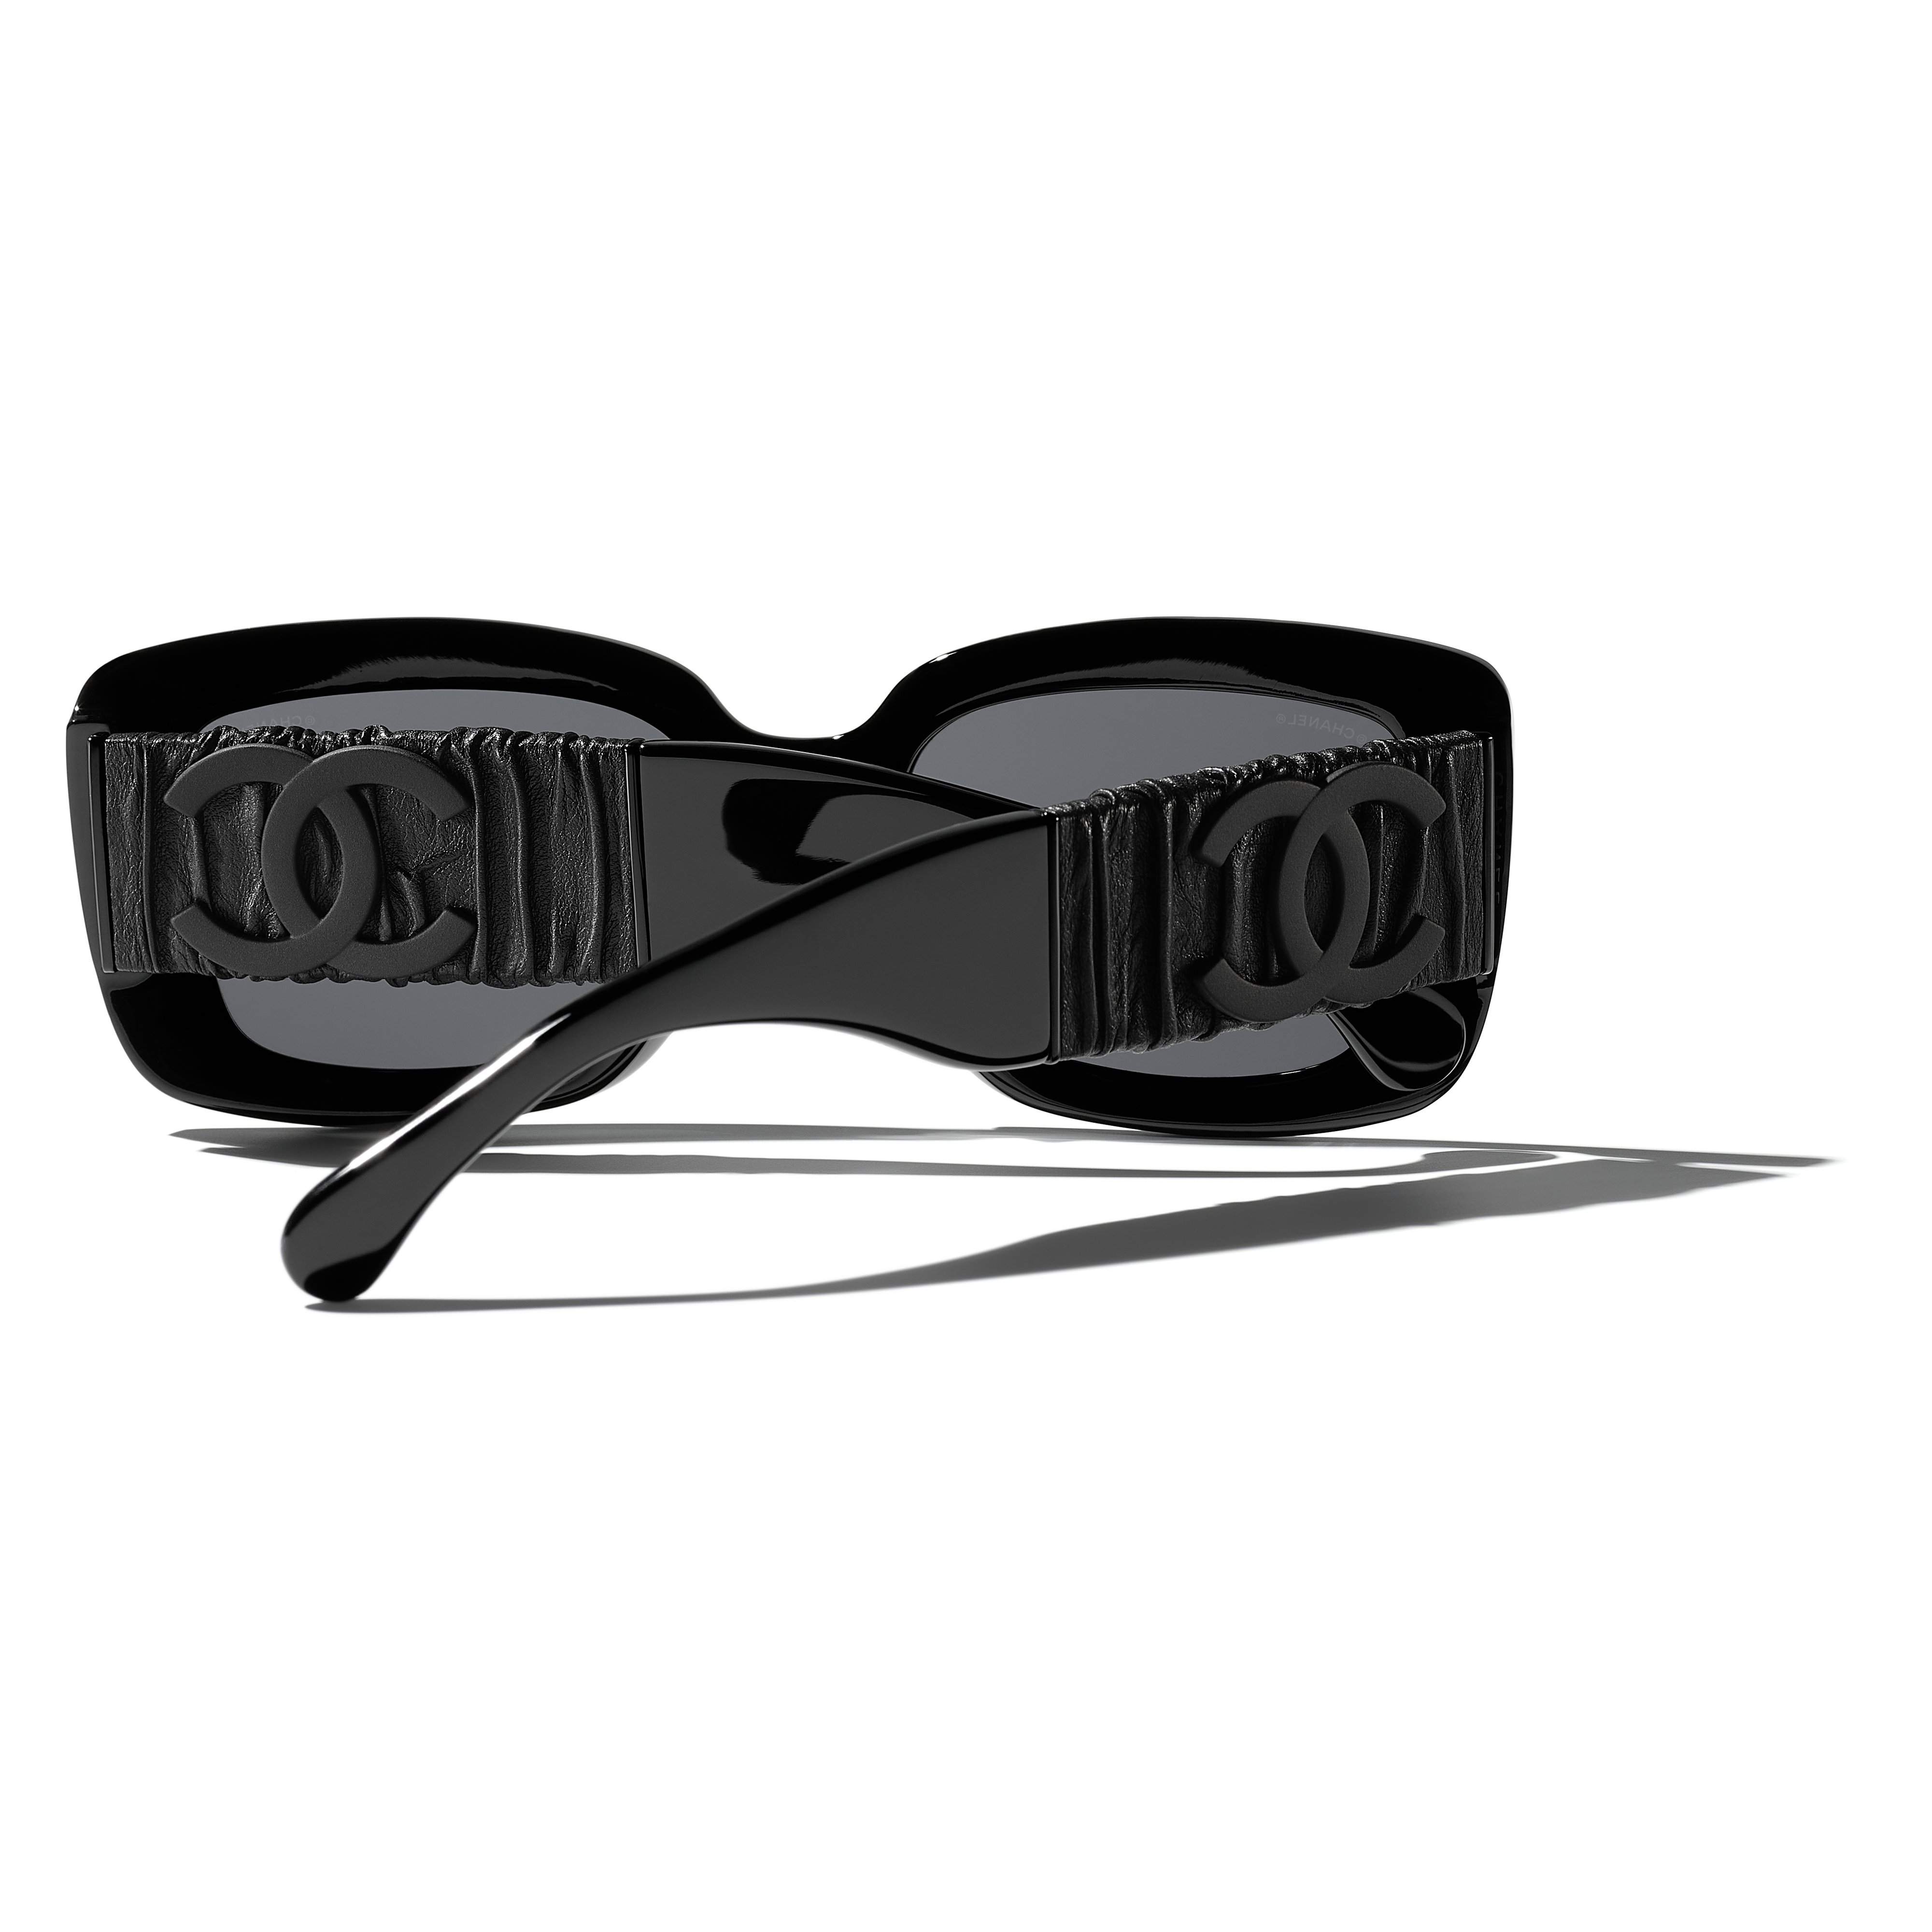 Sunglasses black chanel - Gem